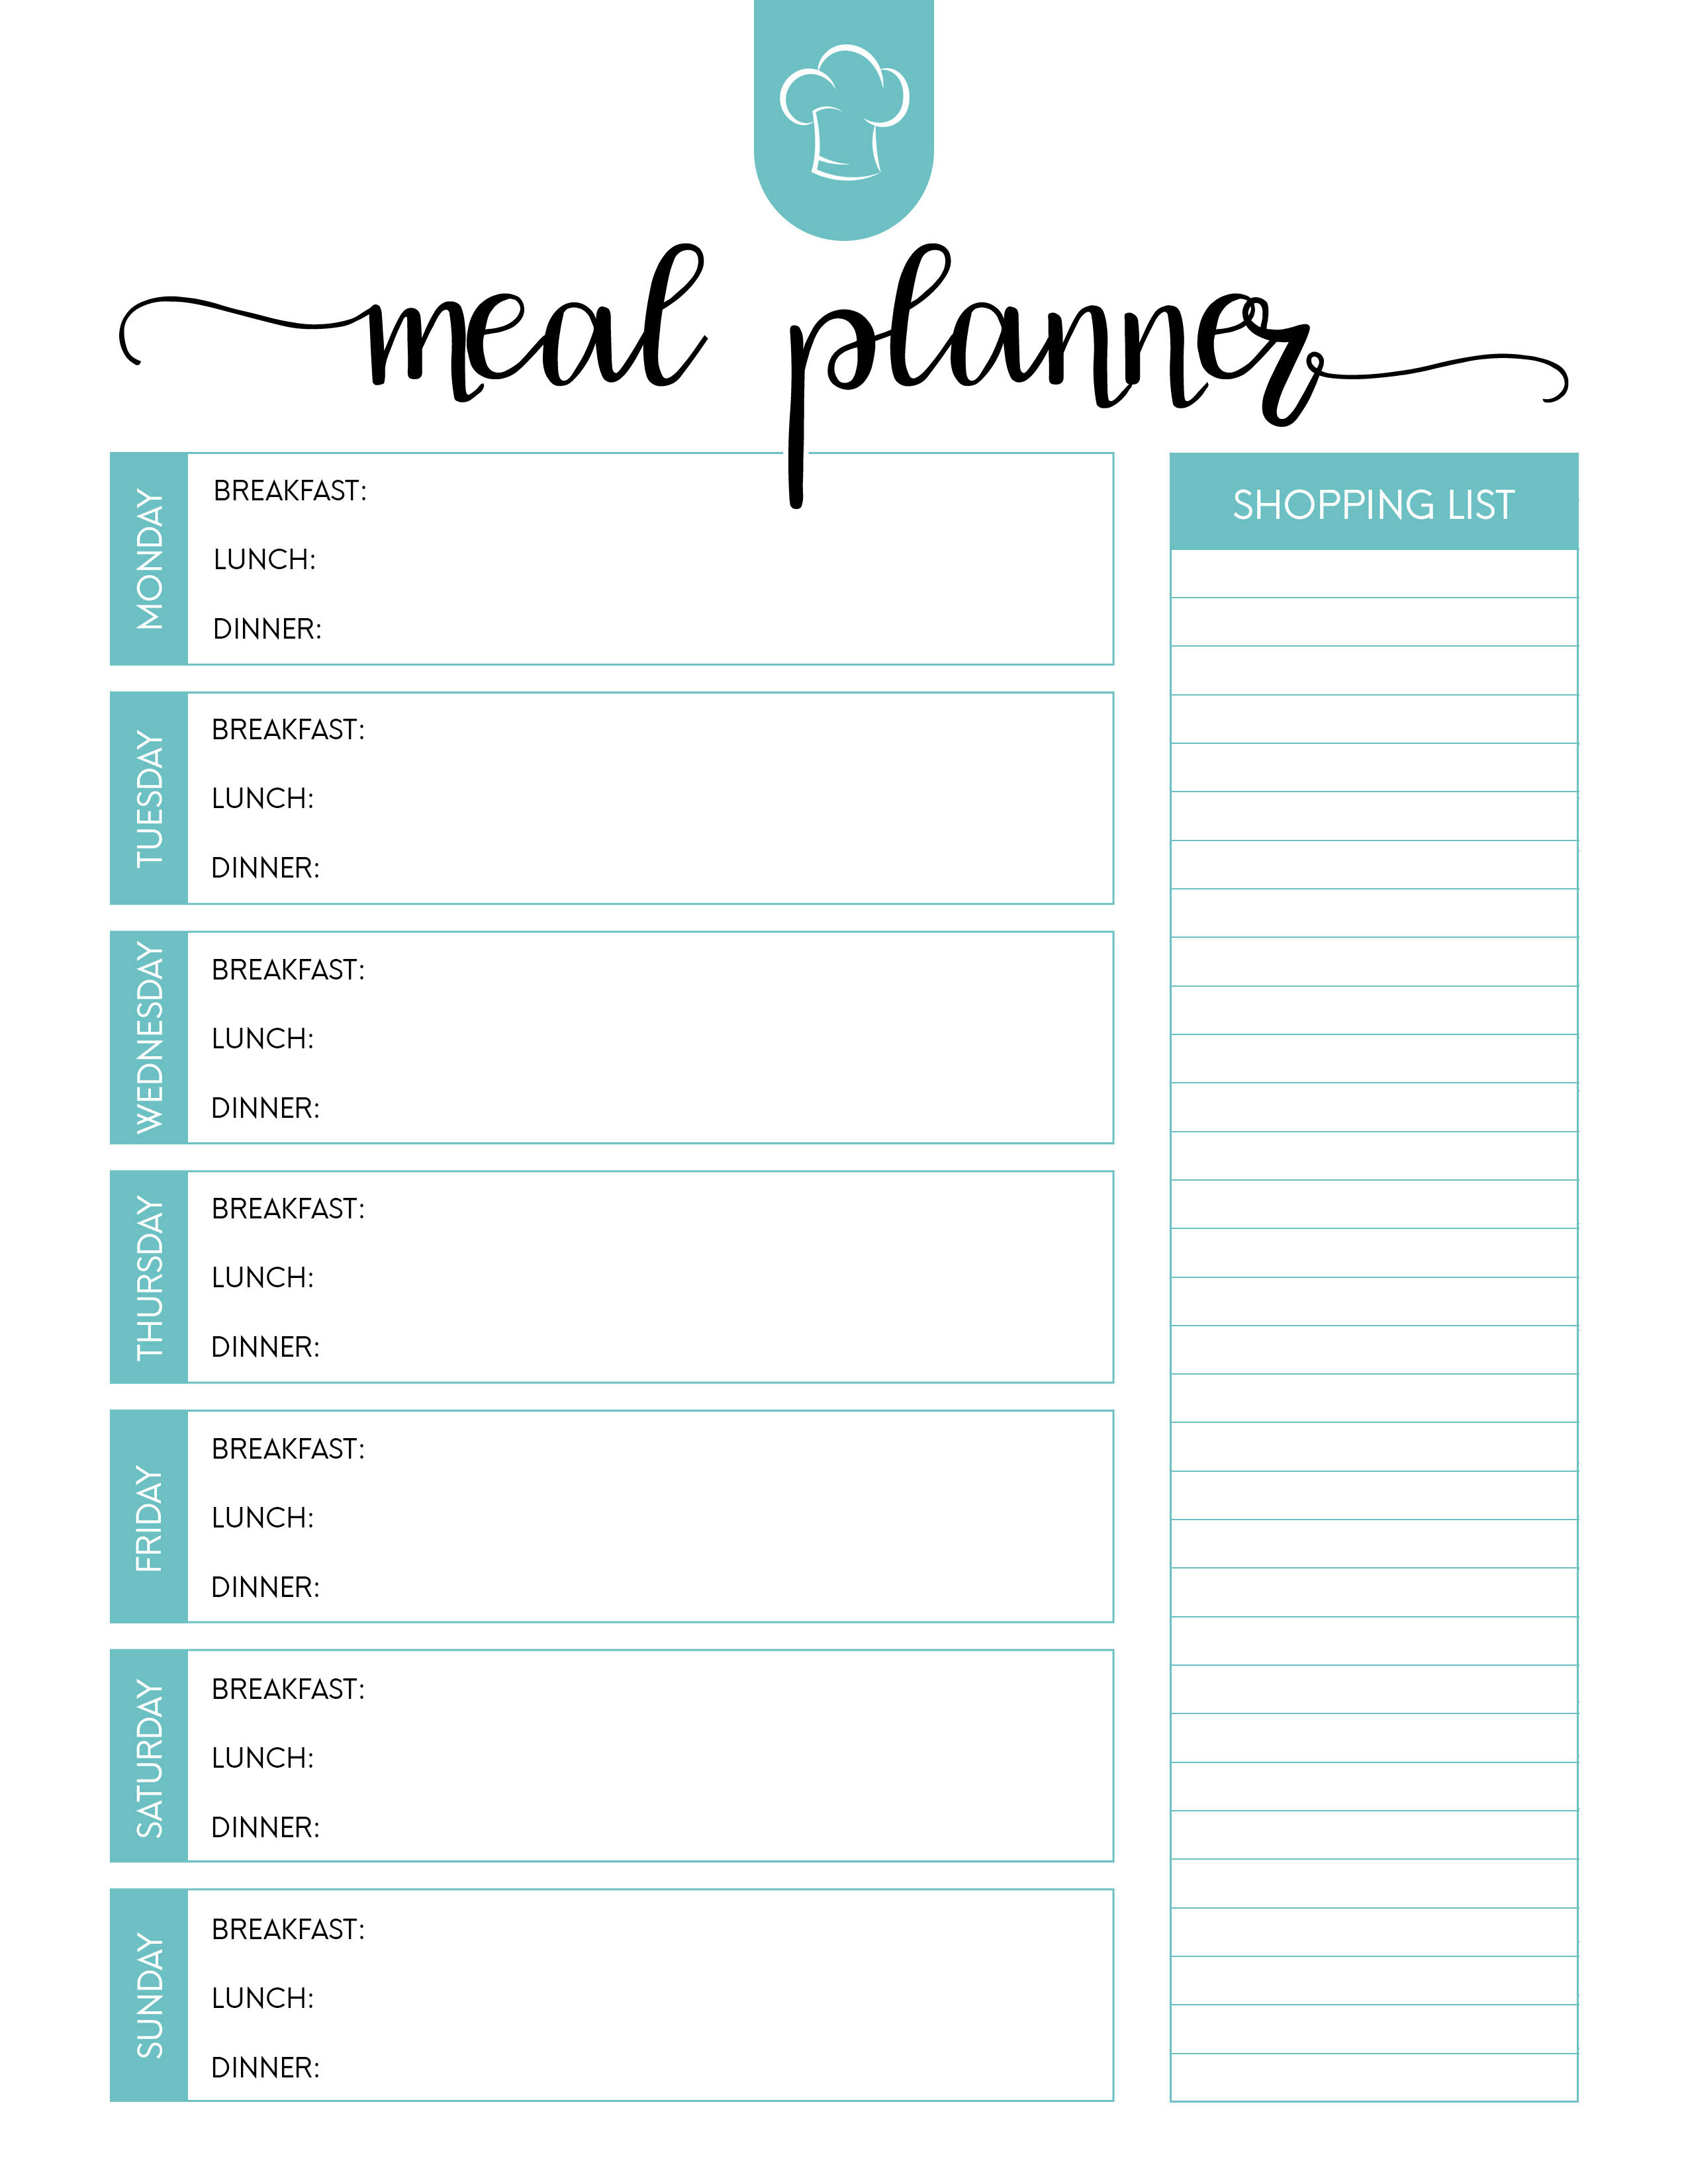 Free Printable Meal Planner | room surf.com